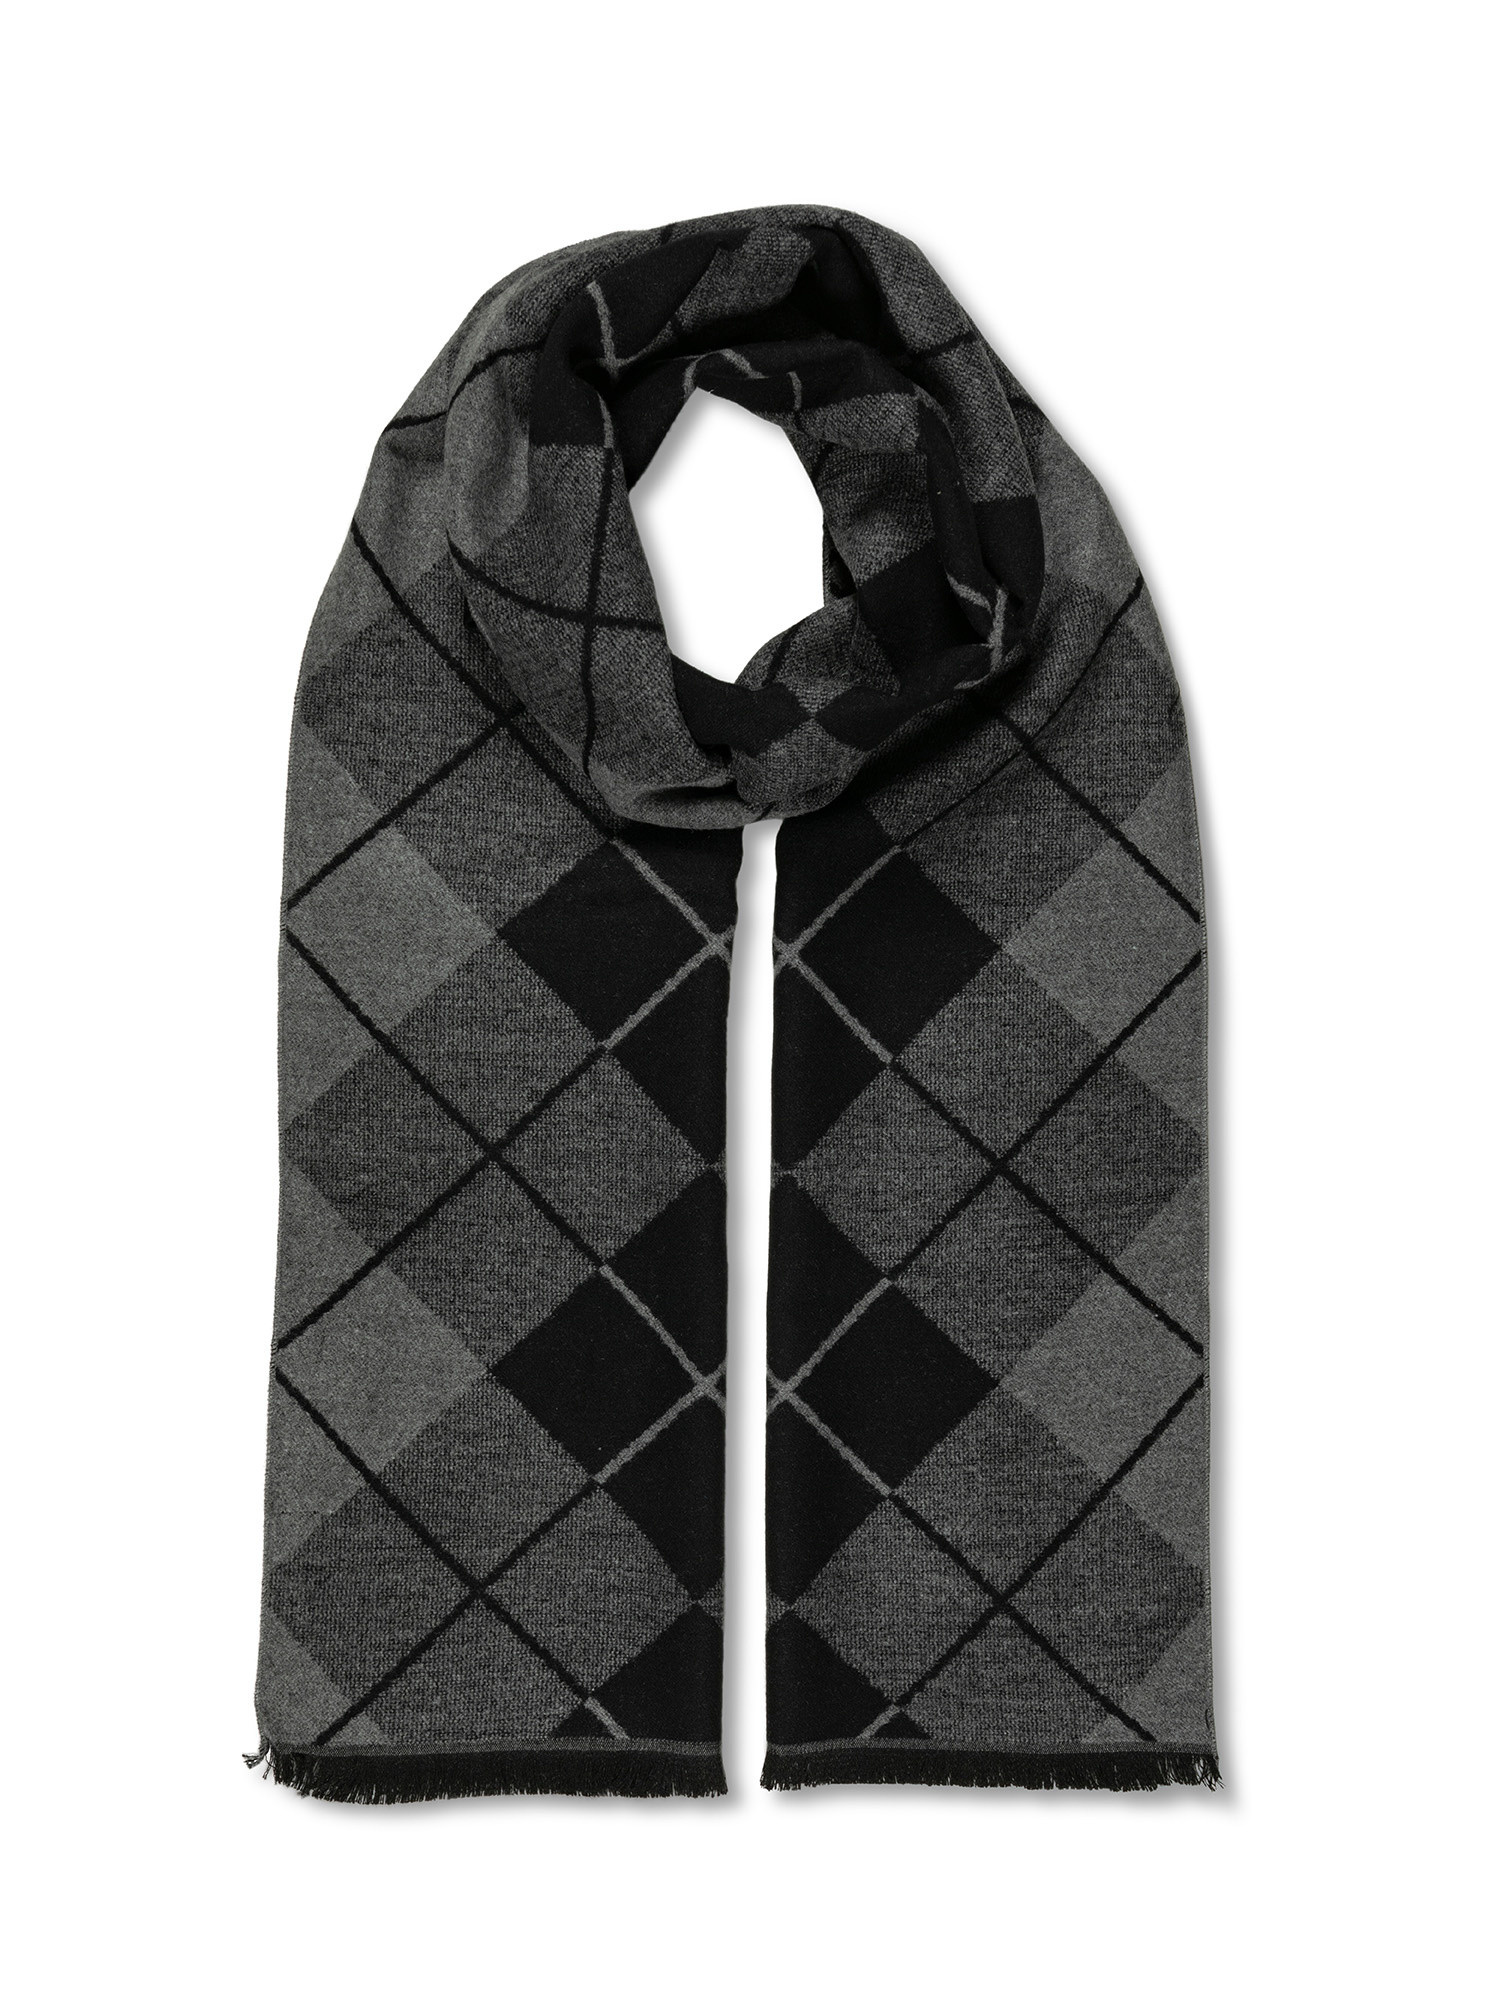 Luca D'Altieri - Diamond-patterned scarf, Black, large image number 0